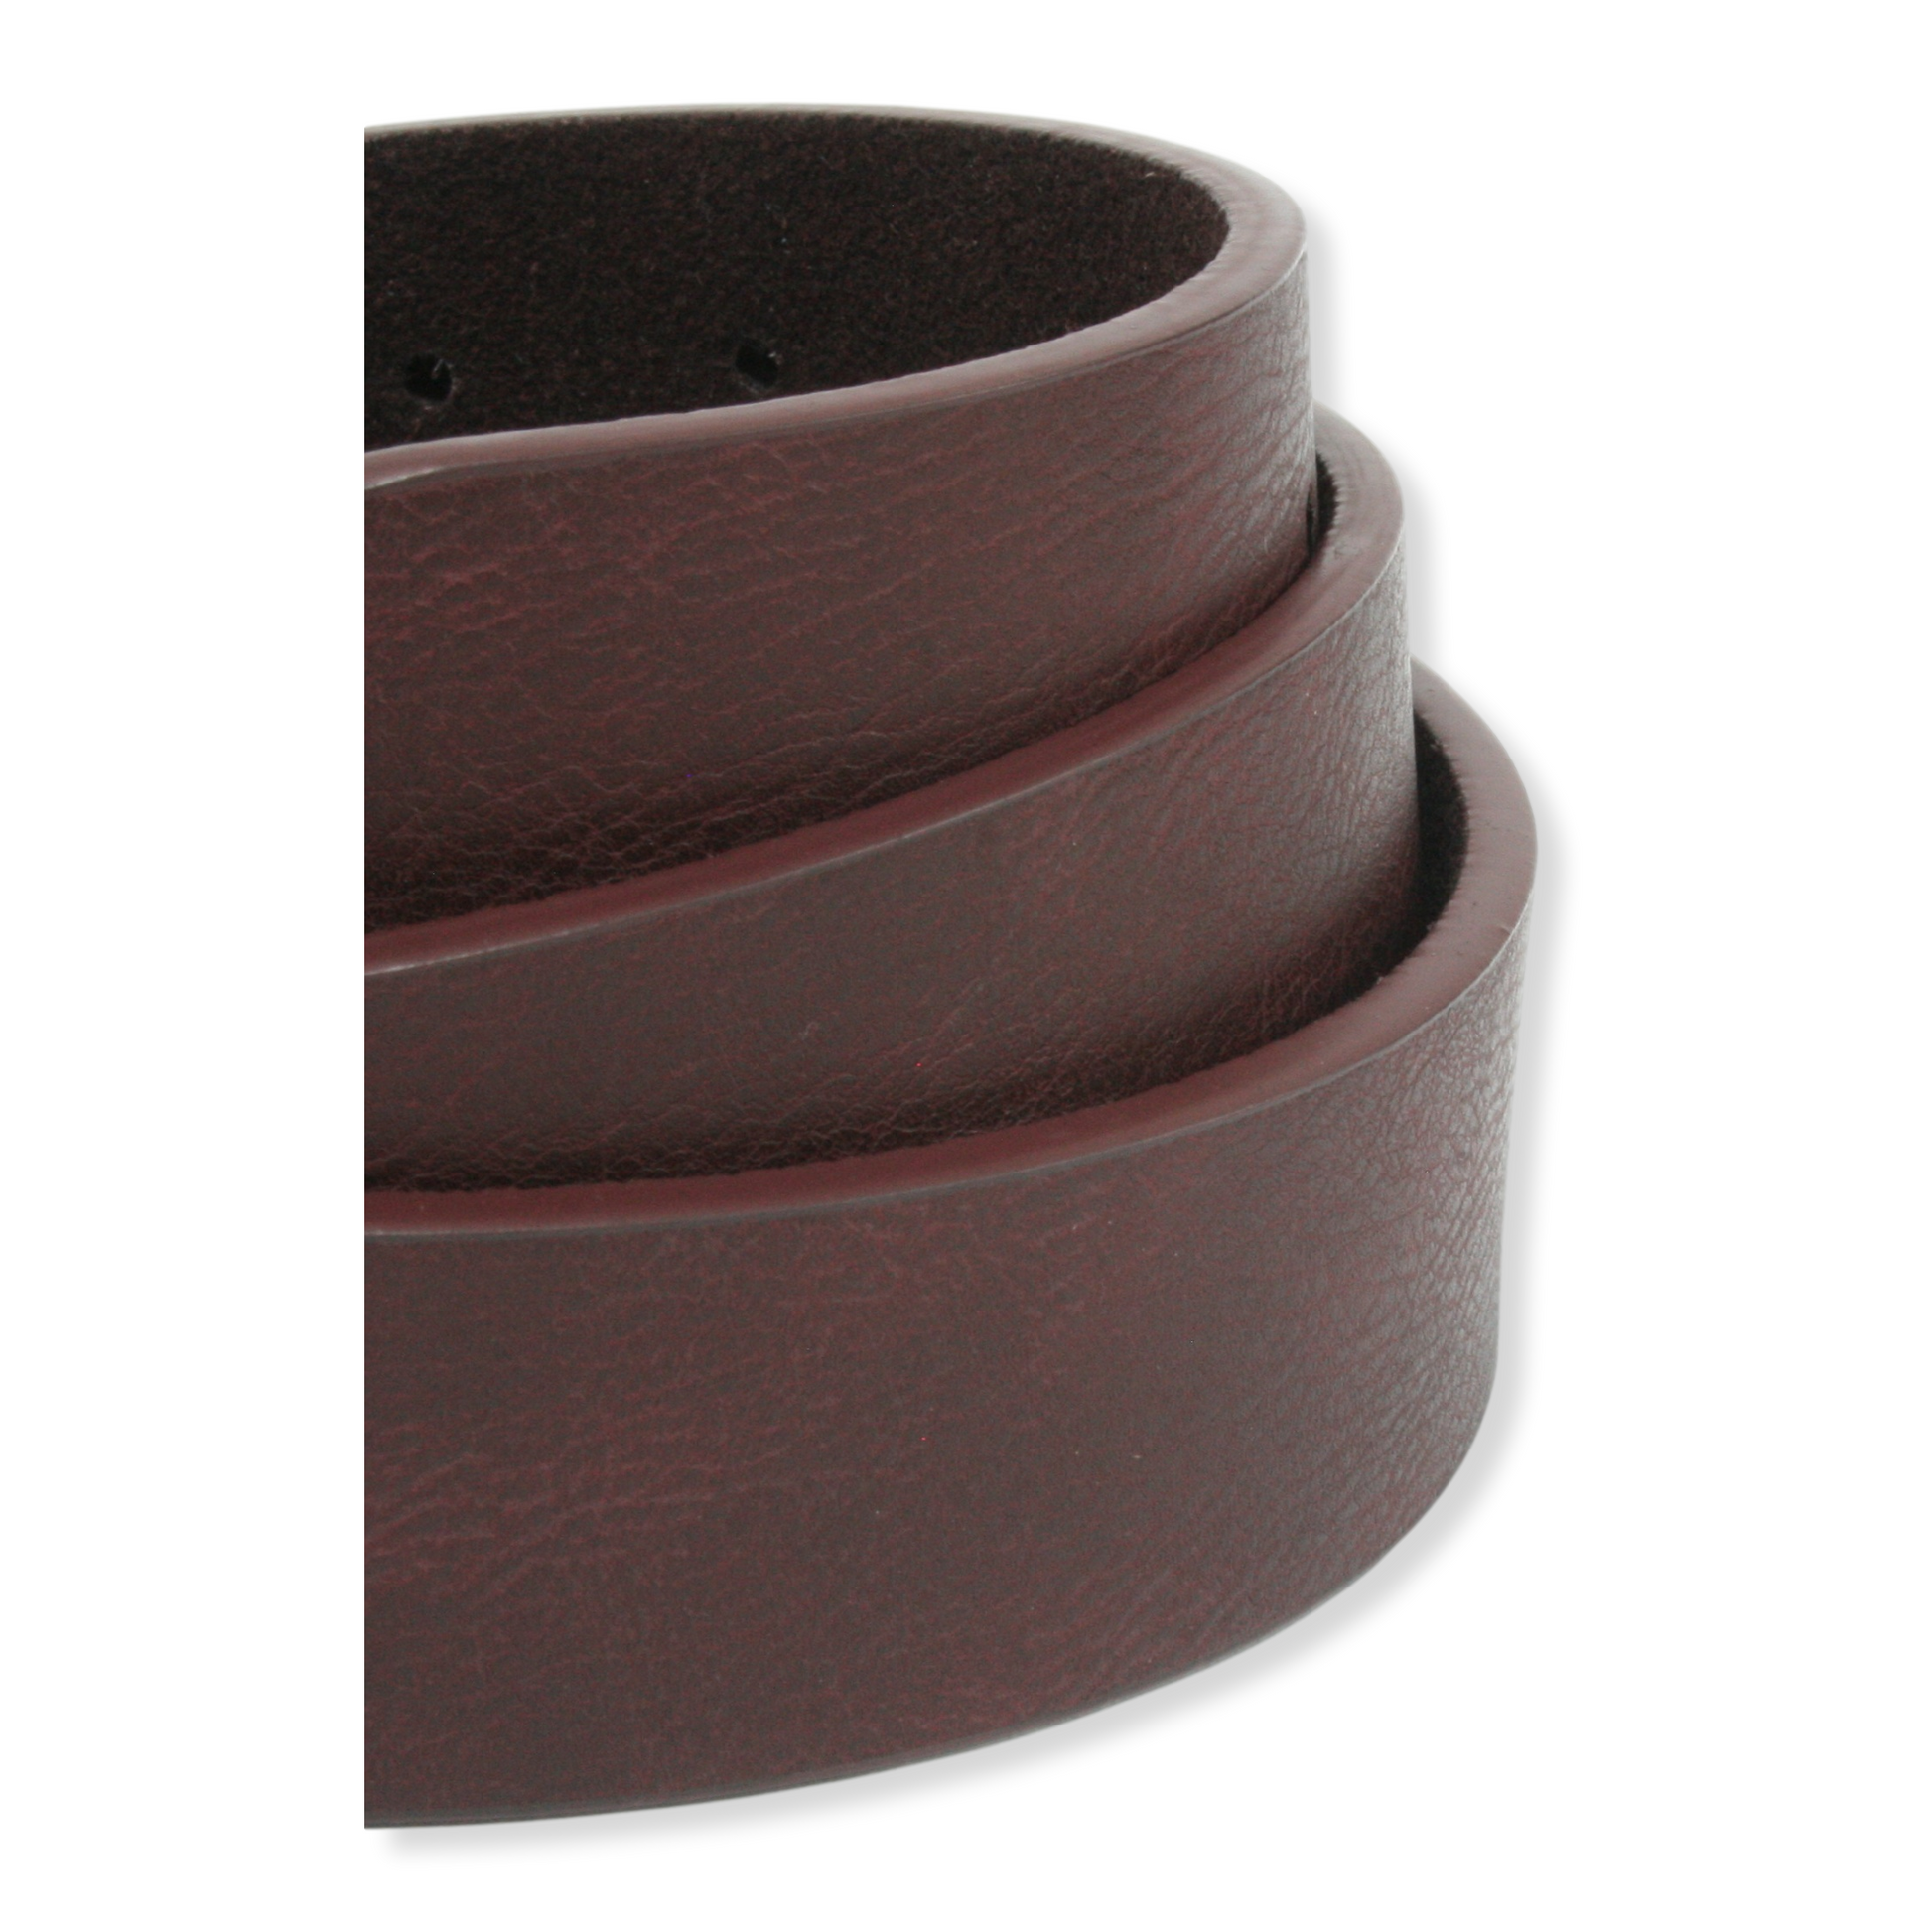 Spaniel Brown Leather Belt